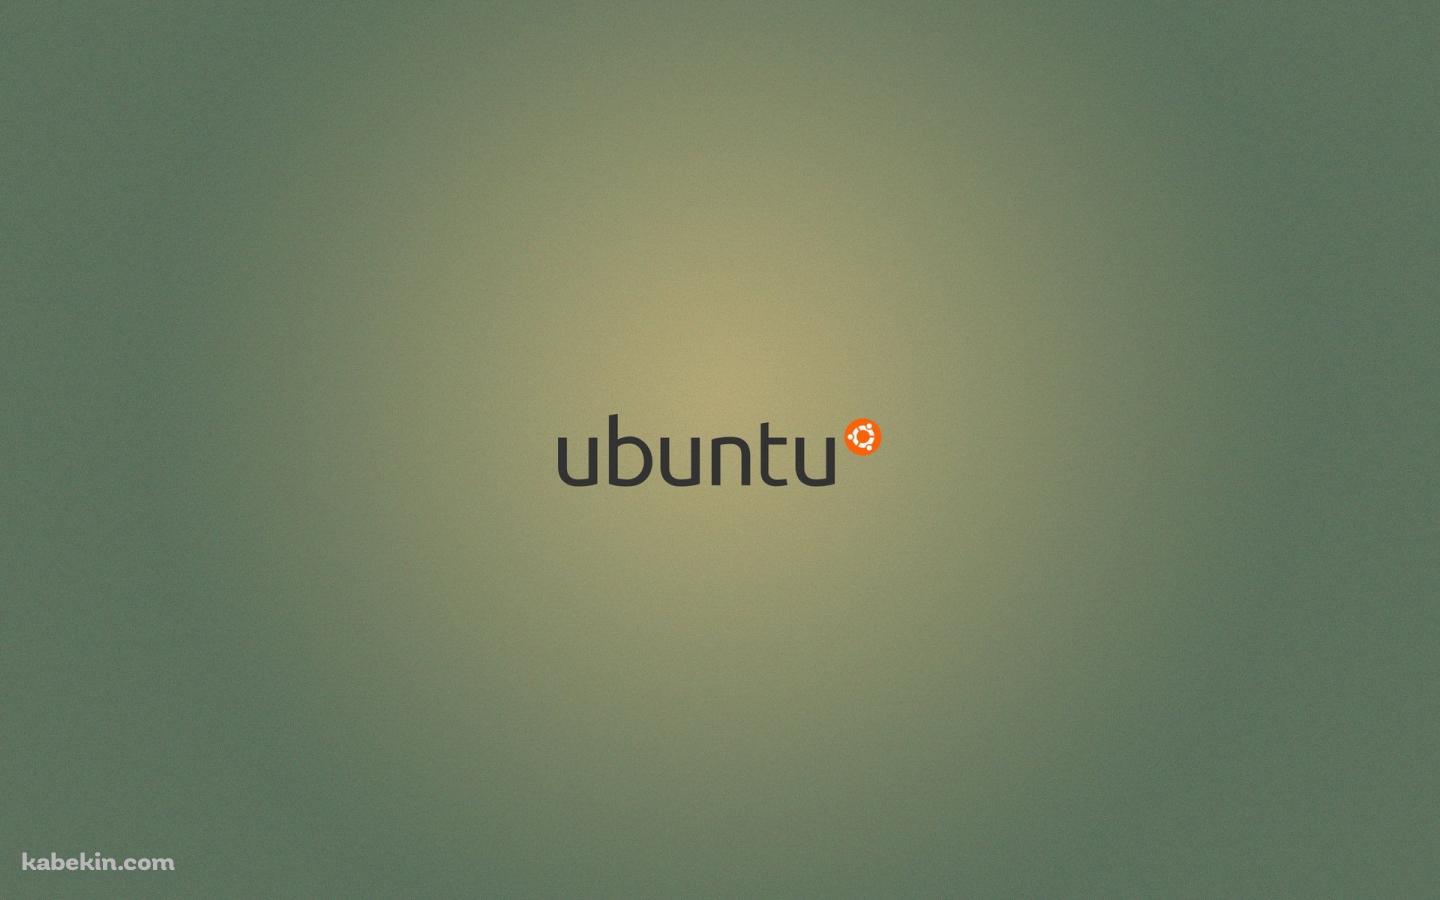 Ubuntuロゴの壁紙(1440px x 900px) 高画質 PC・デスクトップ用